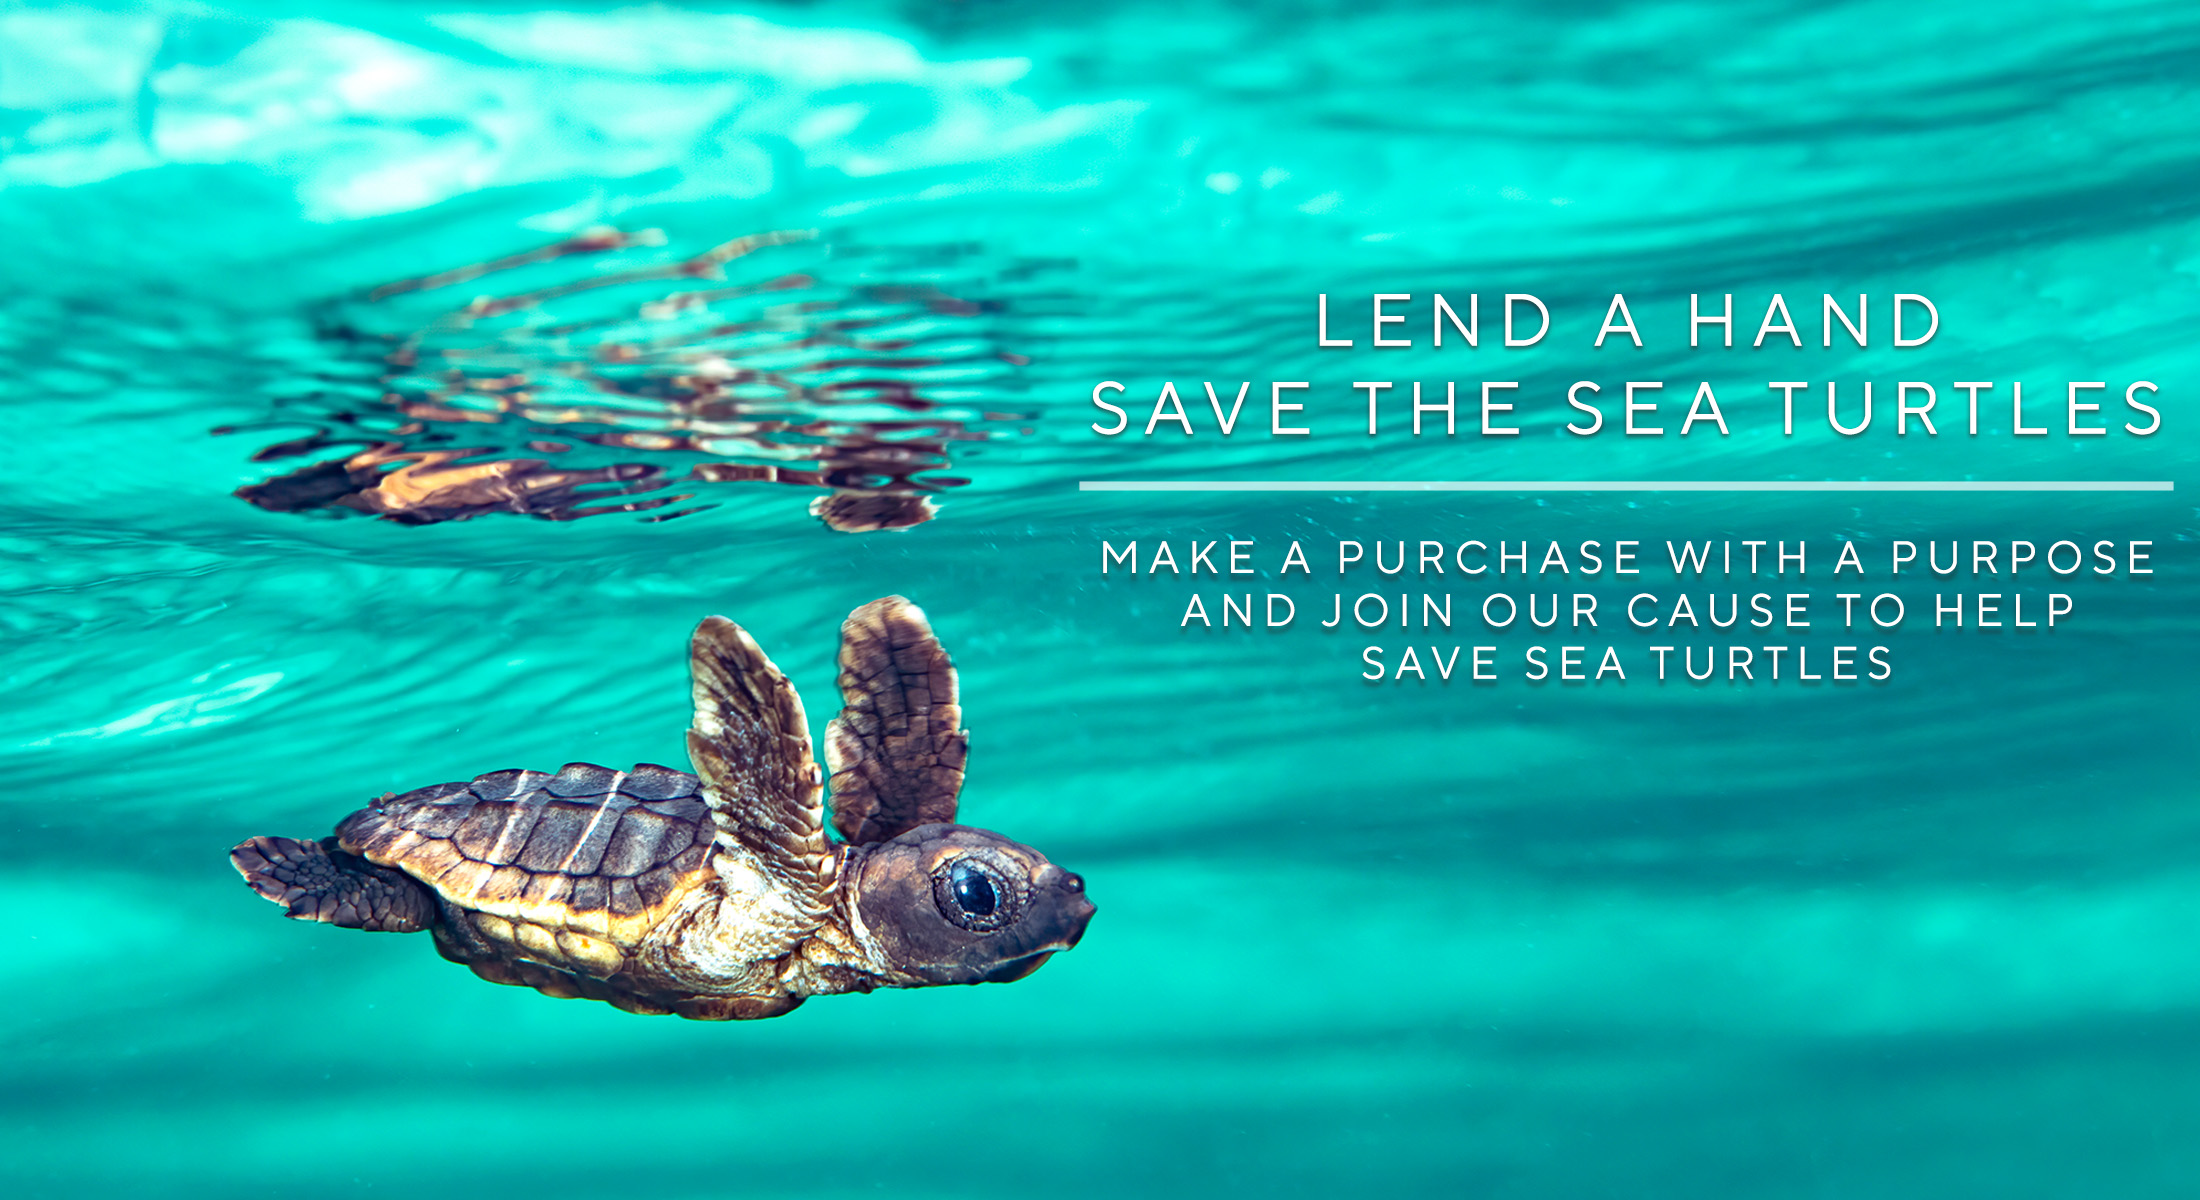 Save the Sea Turtles